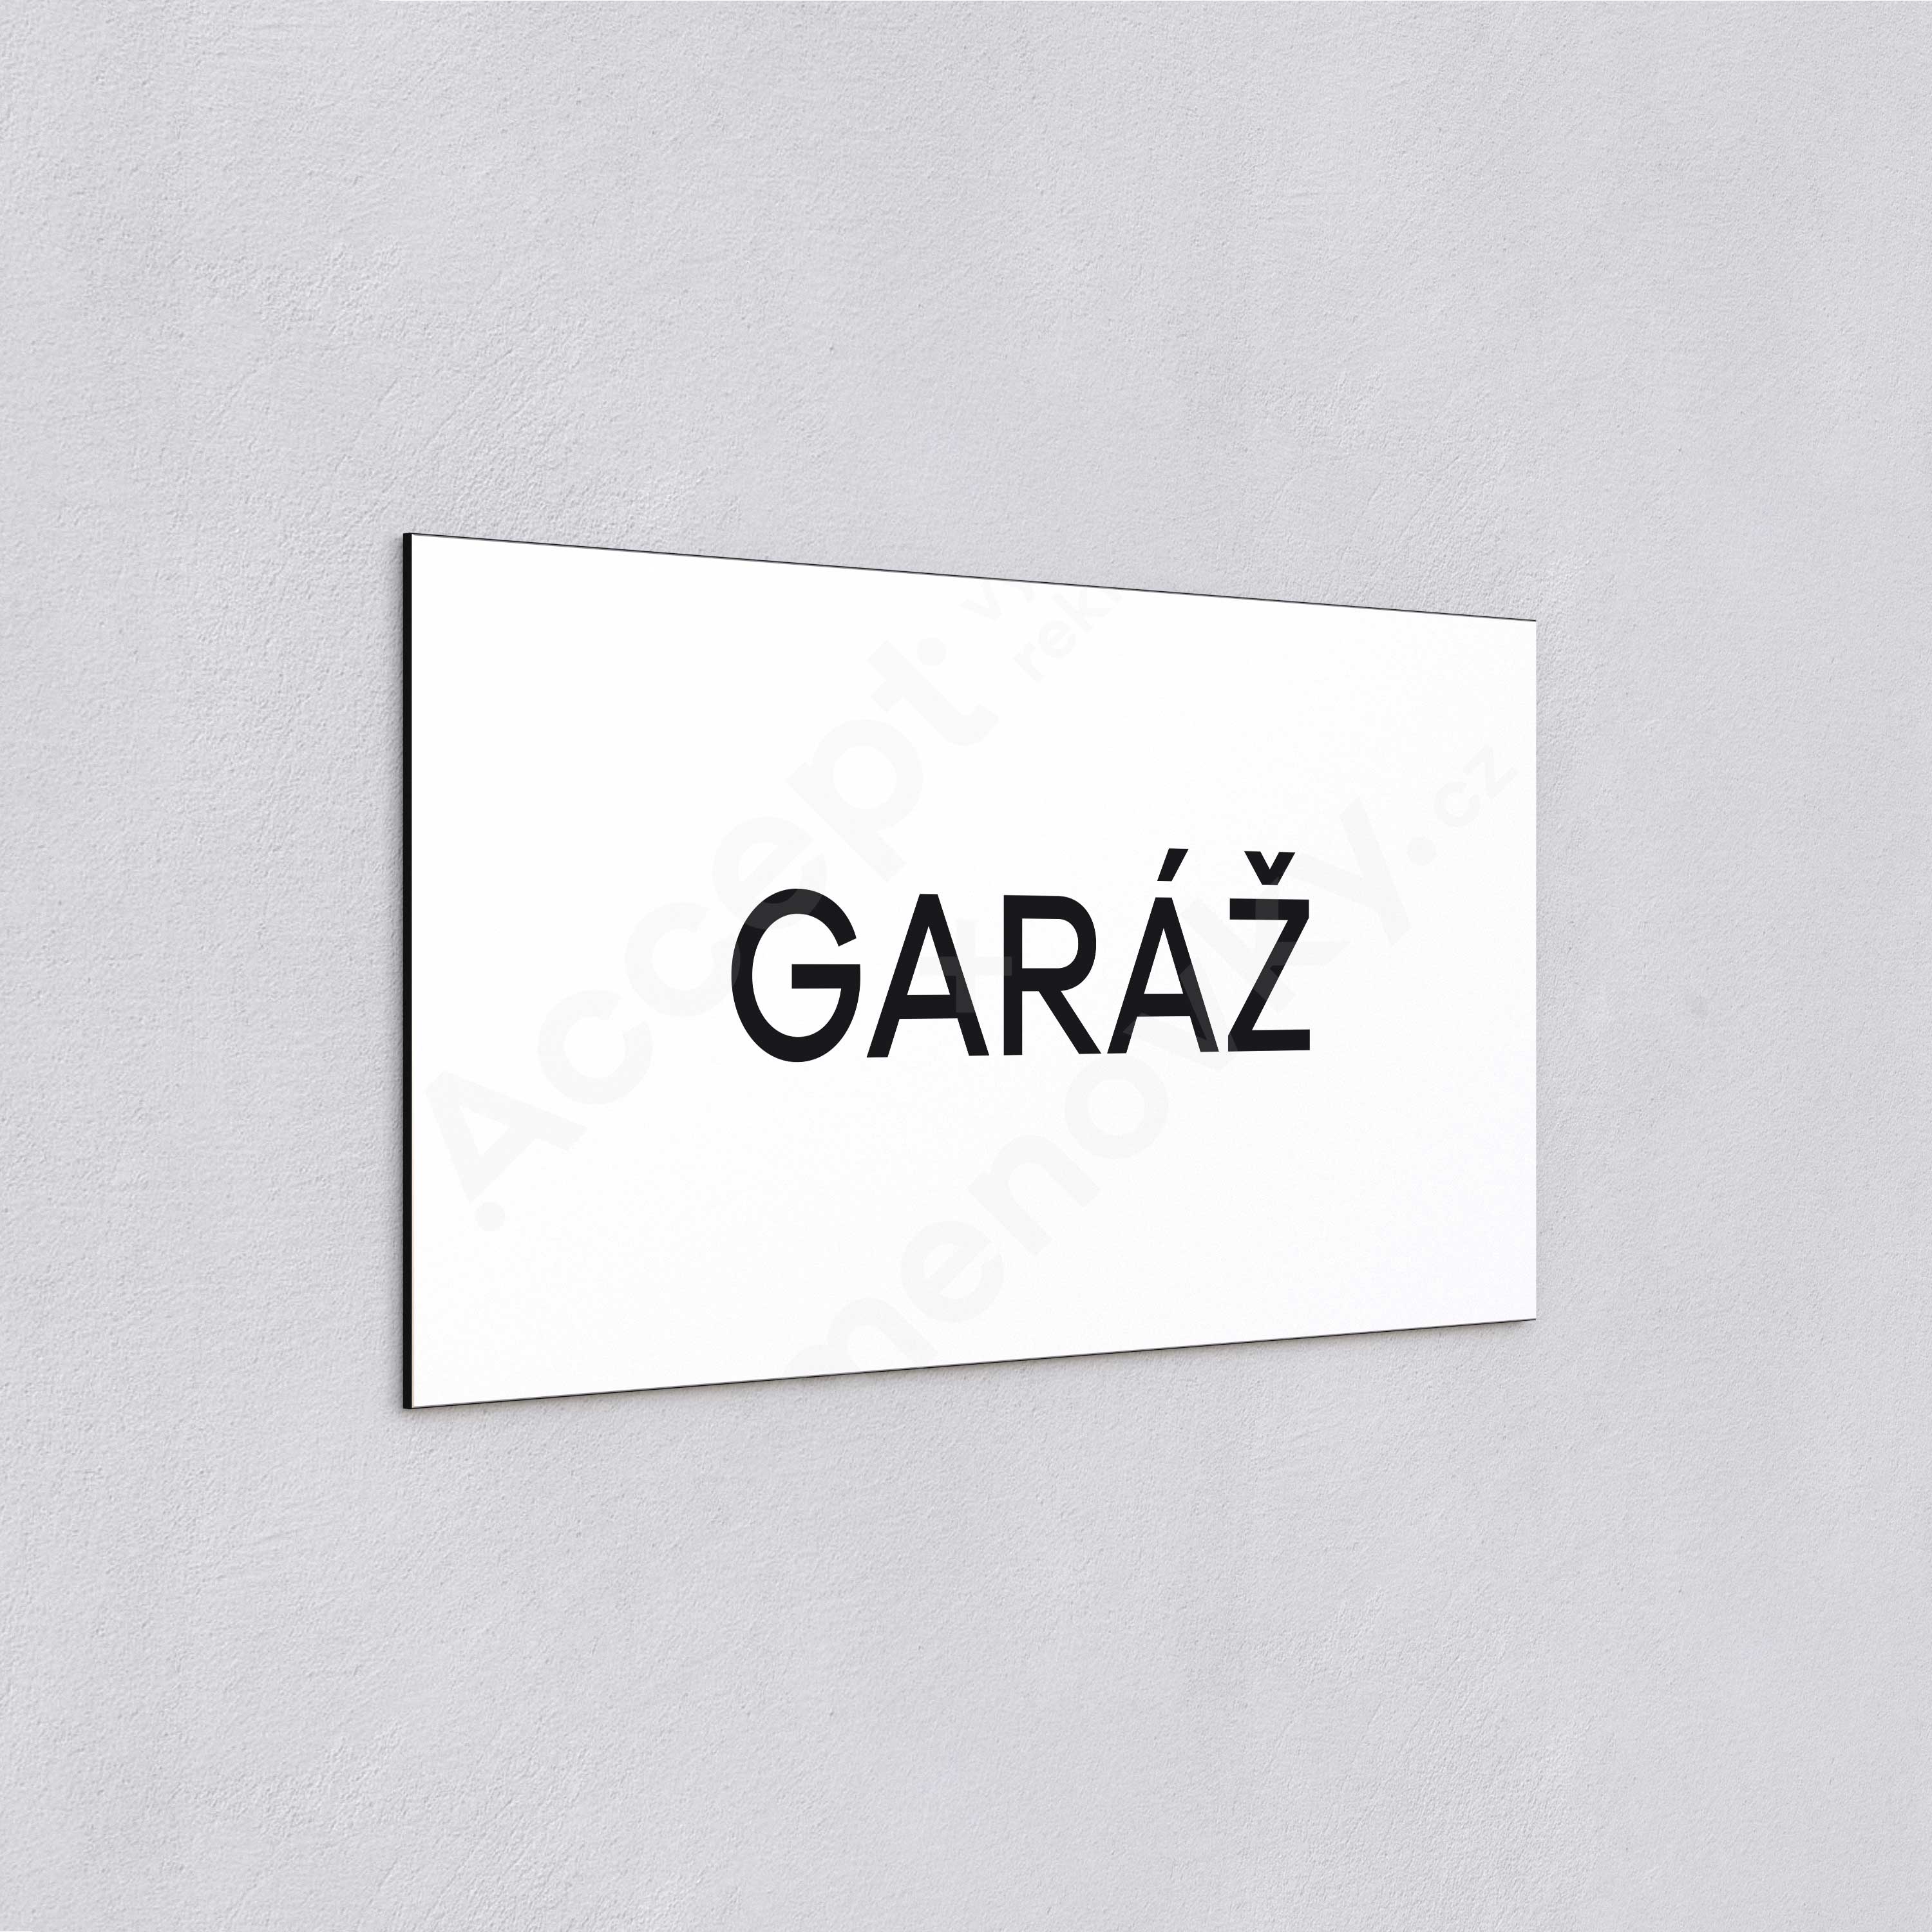 Označení podlaží "GARÁŽ" - bílá tabulka - černý popis